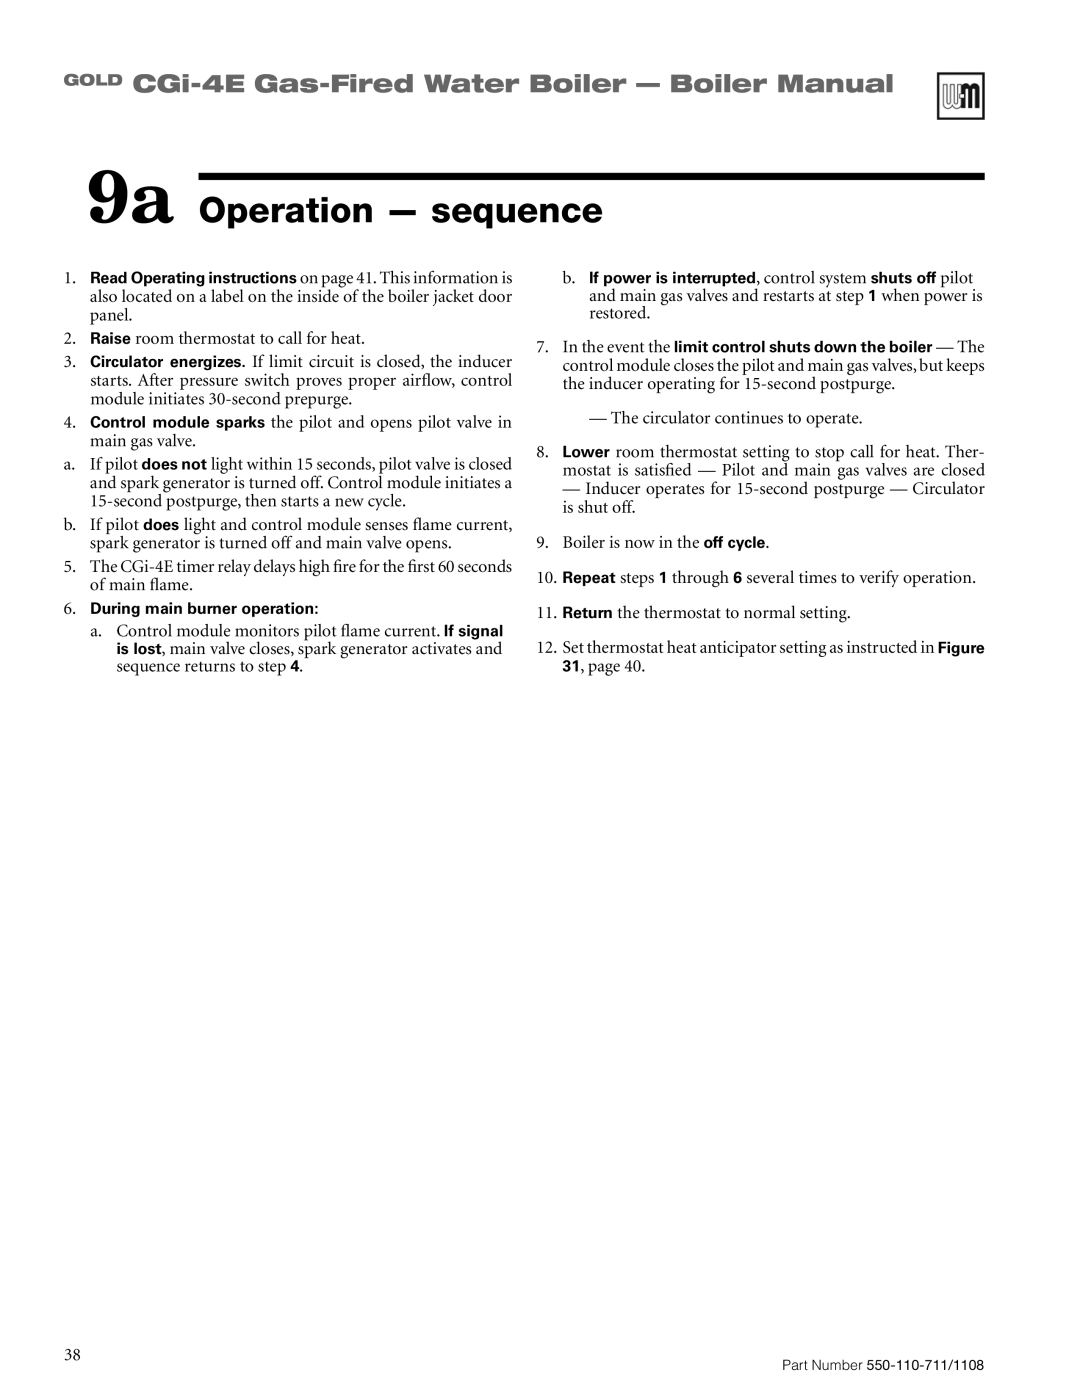 Weil-McLain CGI-4E manual 9a Operation - sequence, GOLD CGi-4E Gas-FiredWater Boiler - Boiler Manual 